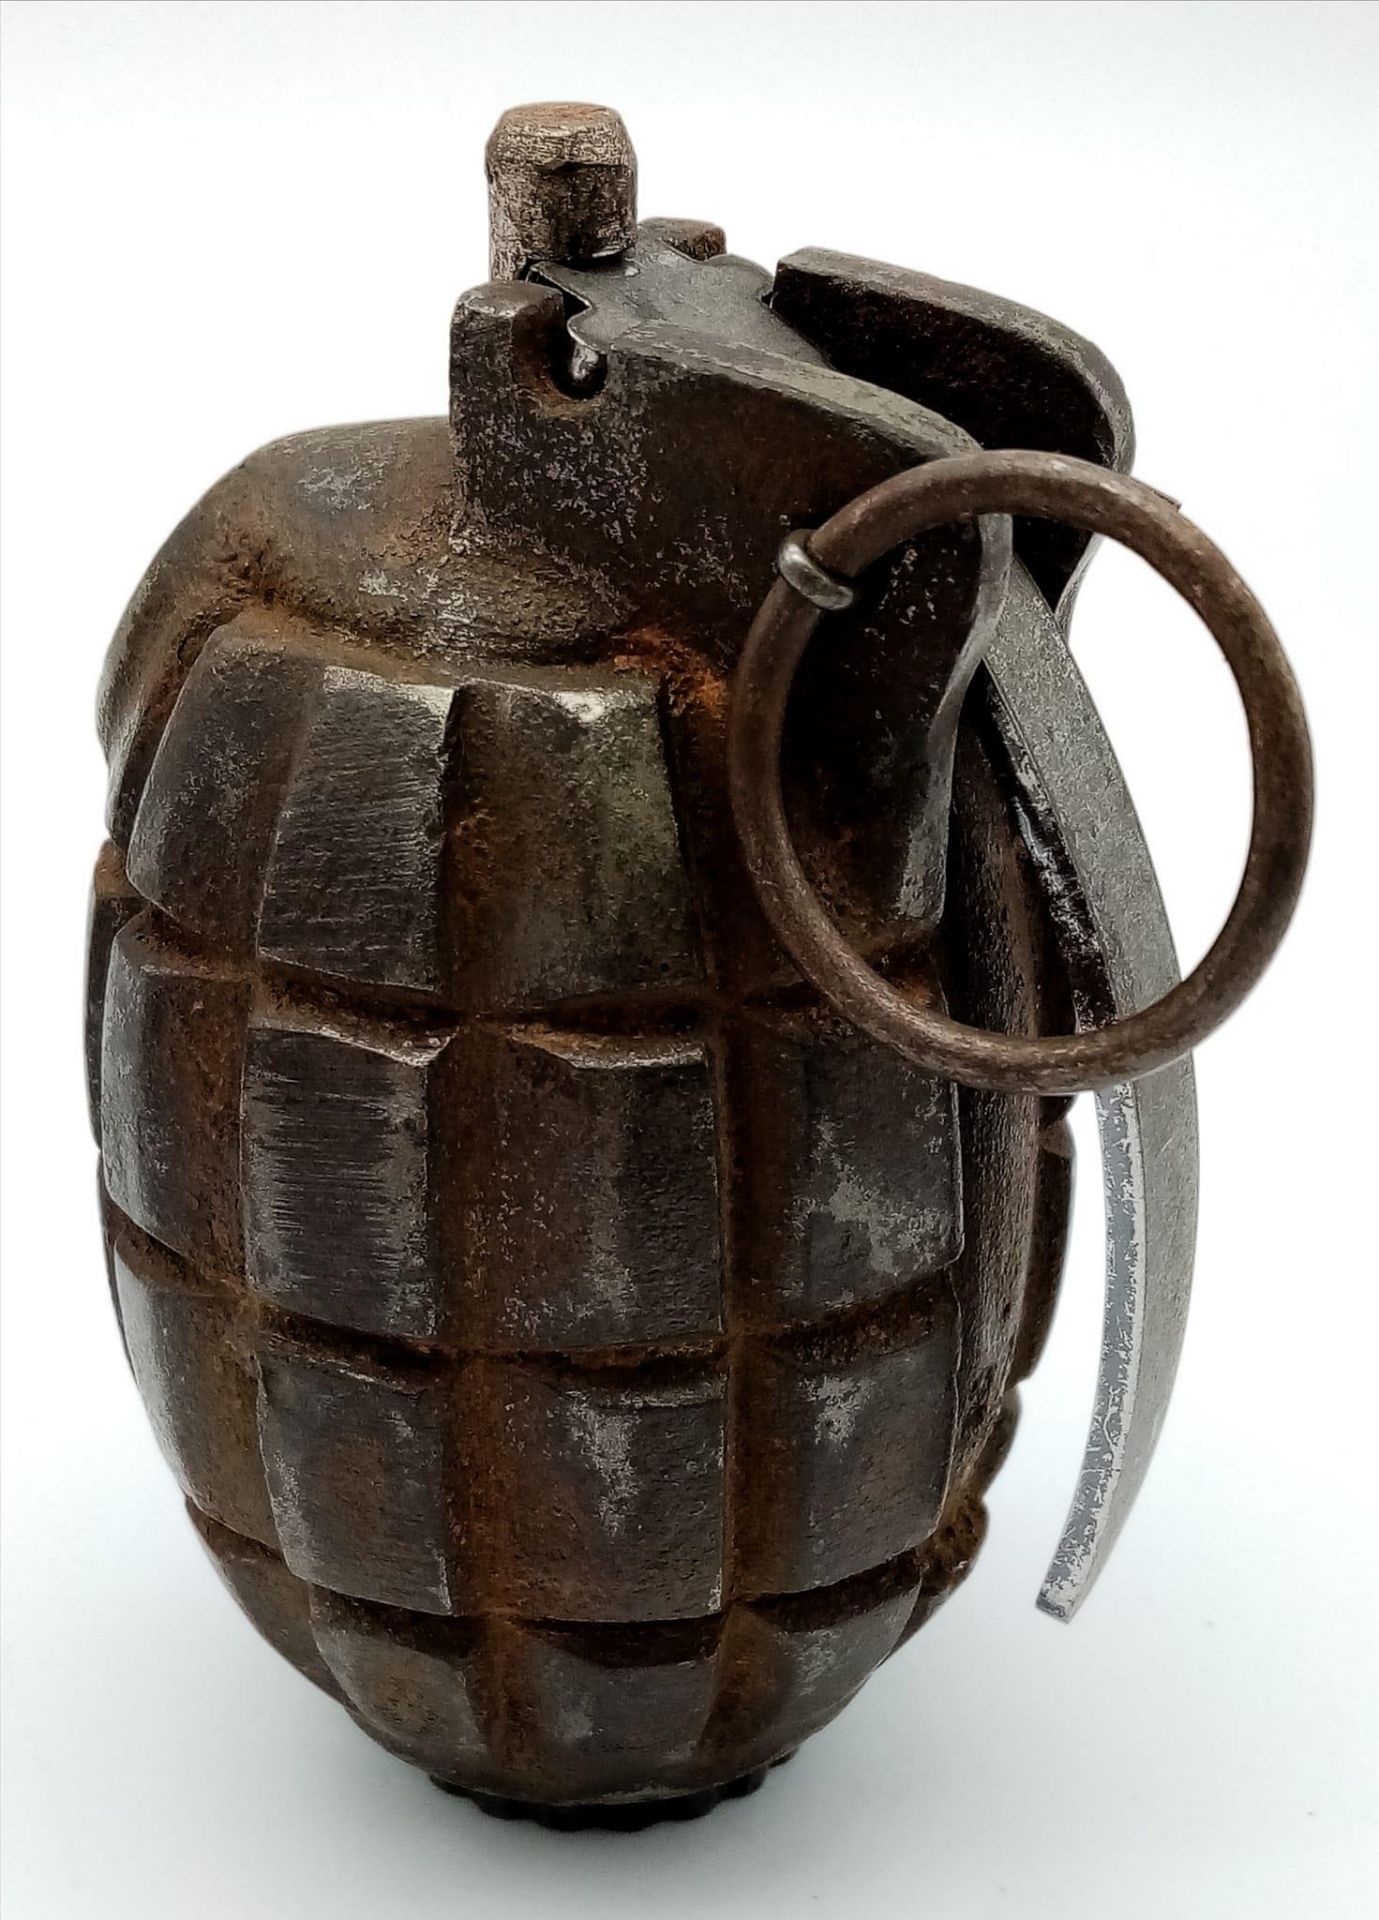 INERT WW2 British No 36 Mills Grenade Dated 1944. Complete with centre tube, spring, striker,